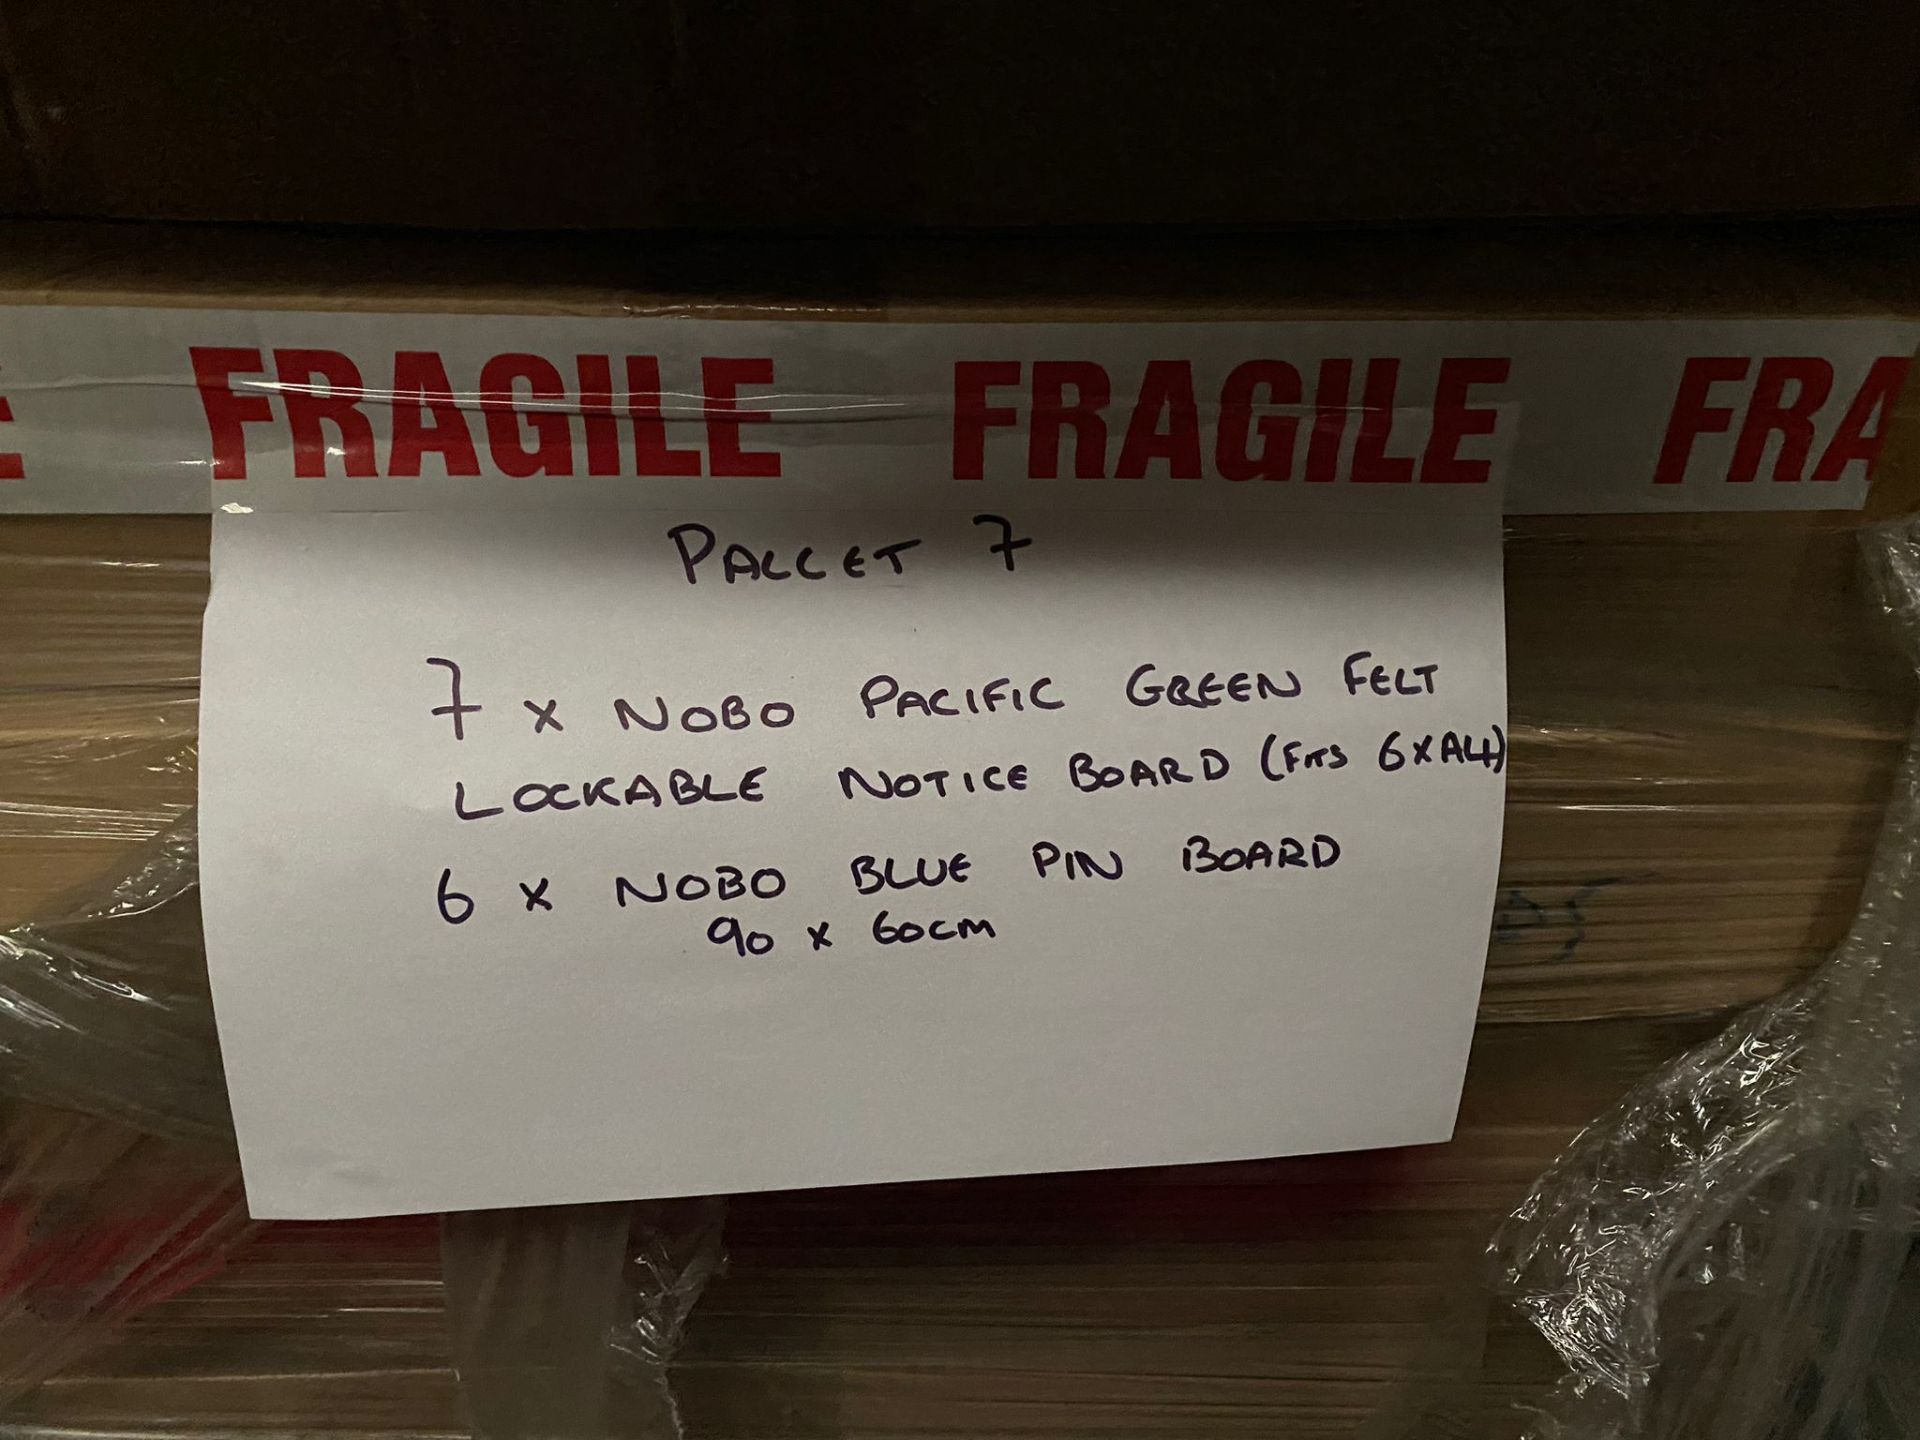 7 Nobo (Fits 6 x A4) Pacific Green Felt Internal Lockable Notice Board & 6 x Nobo Blue Pin Board - Image 3 of 4